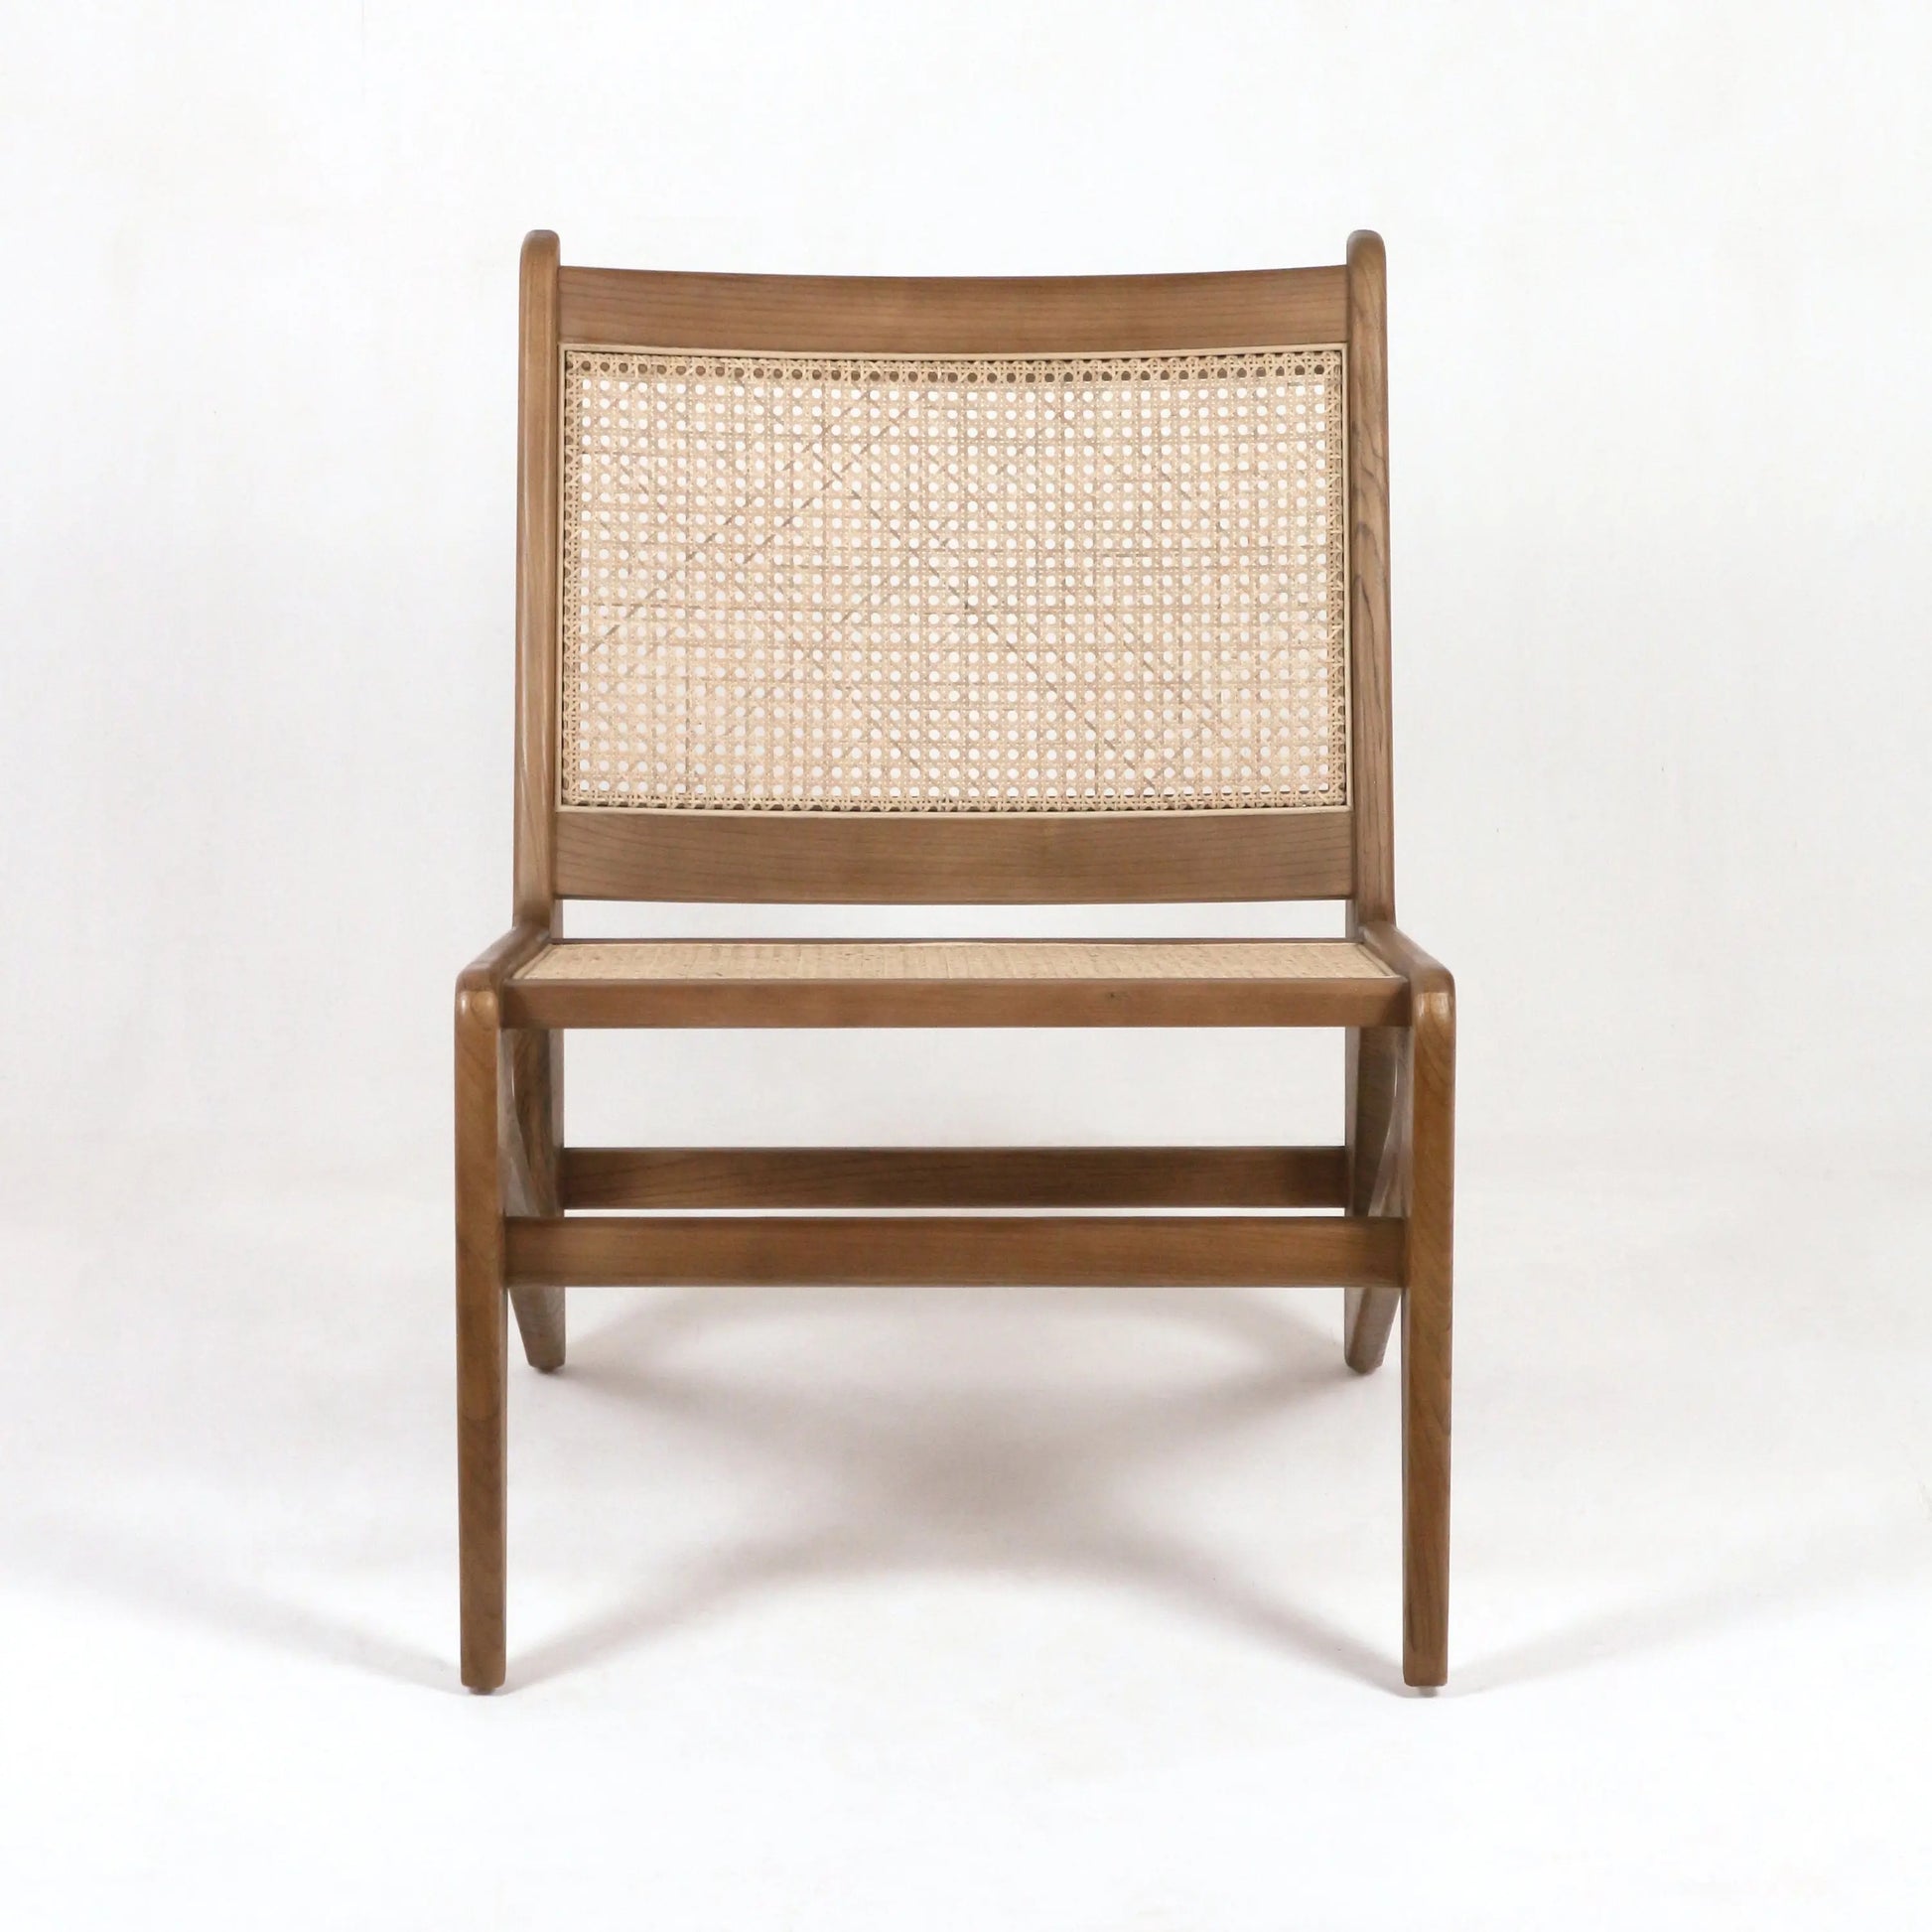 Art Deco Revival: Modernist lounge chair In Teak - Moderncre8ve